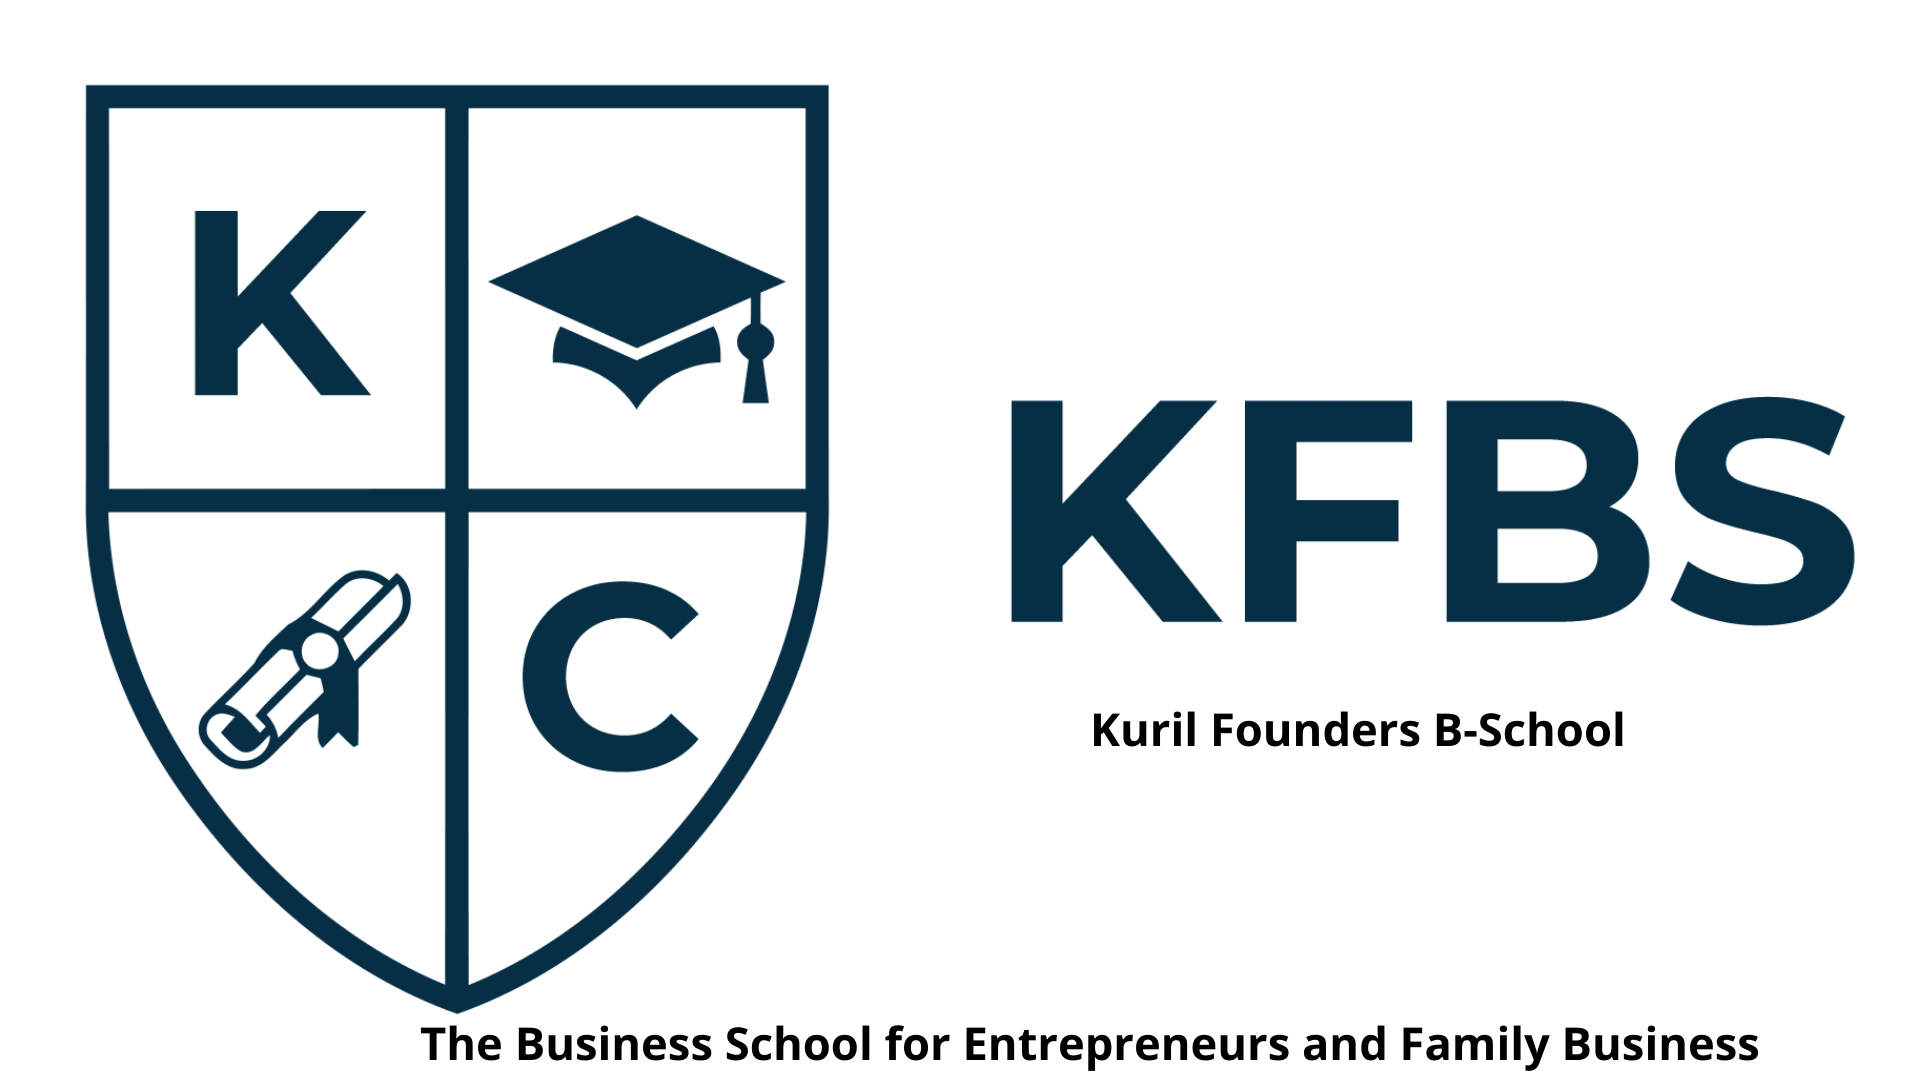 Kuril Founders B-School